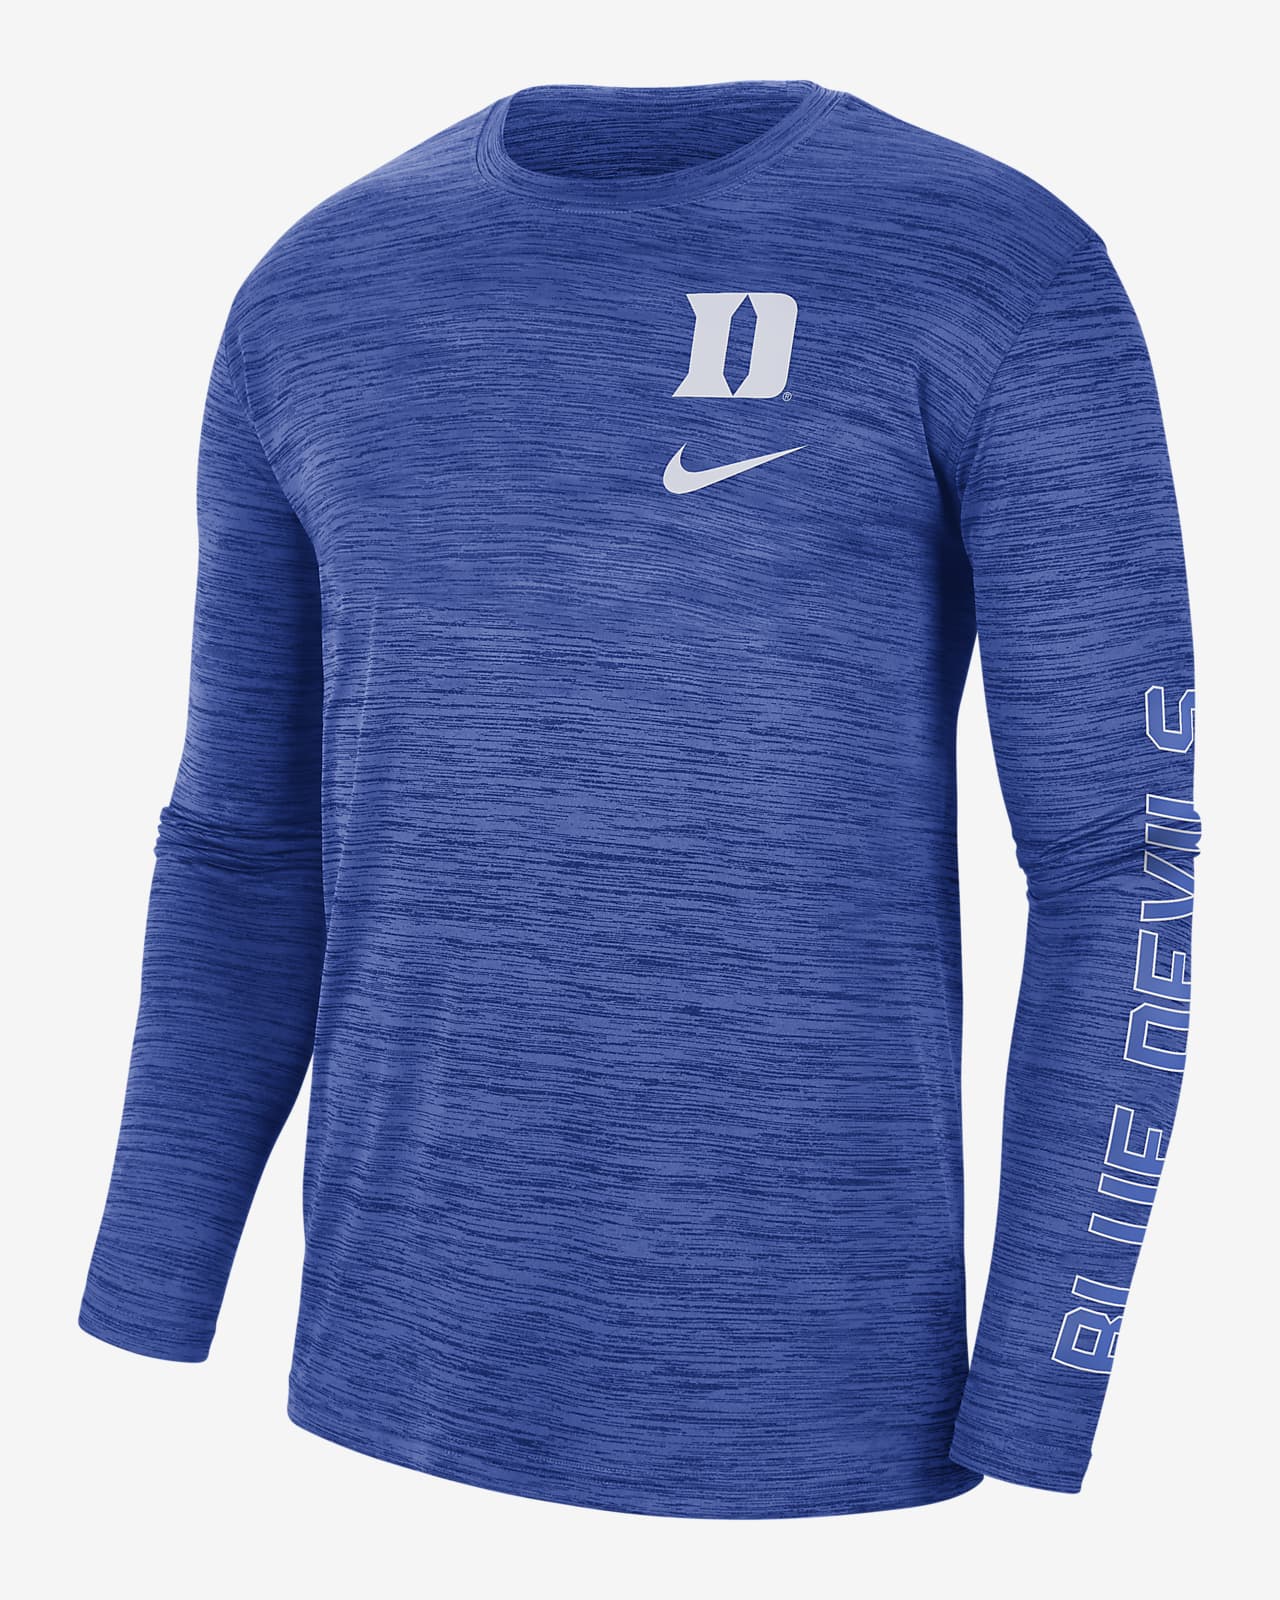 College (Duke) Men's Long-Sleeve Graphic T-Shirt. Nike.com